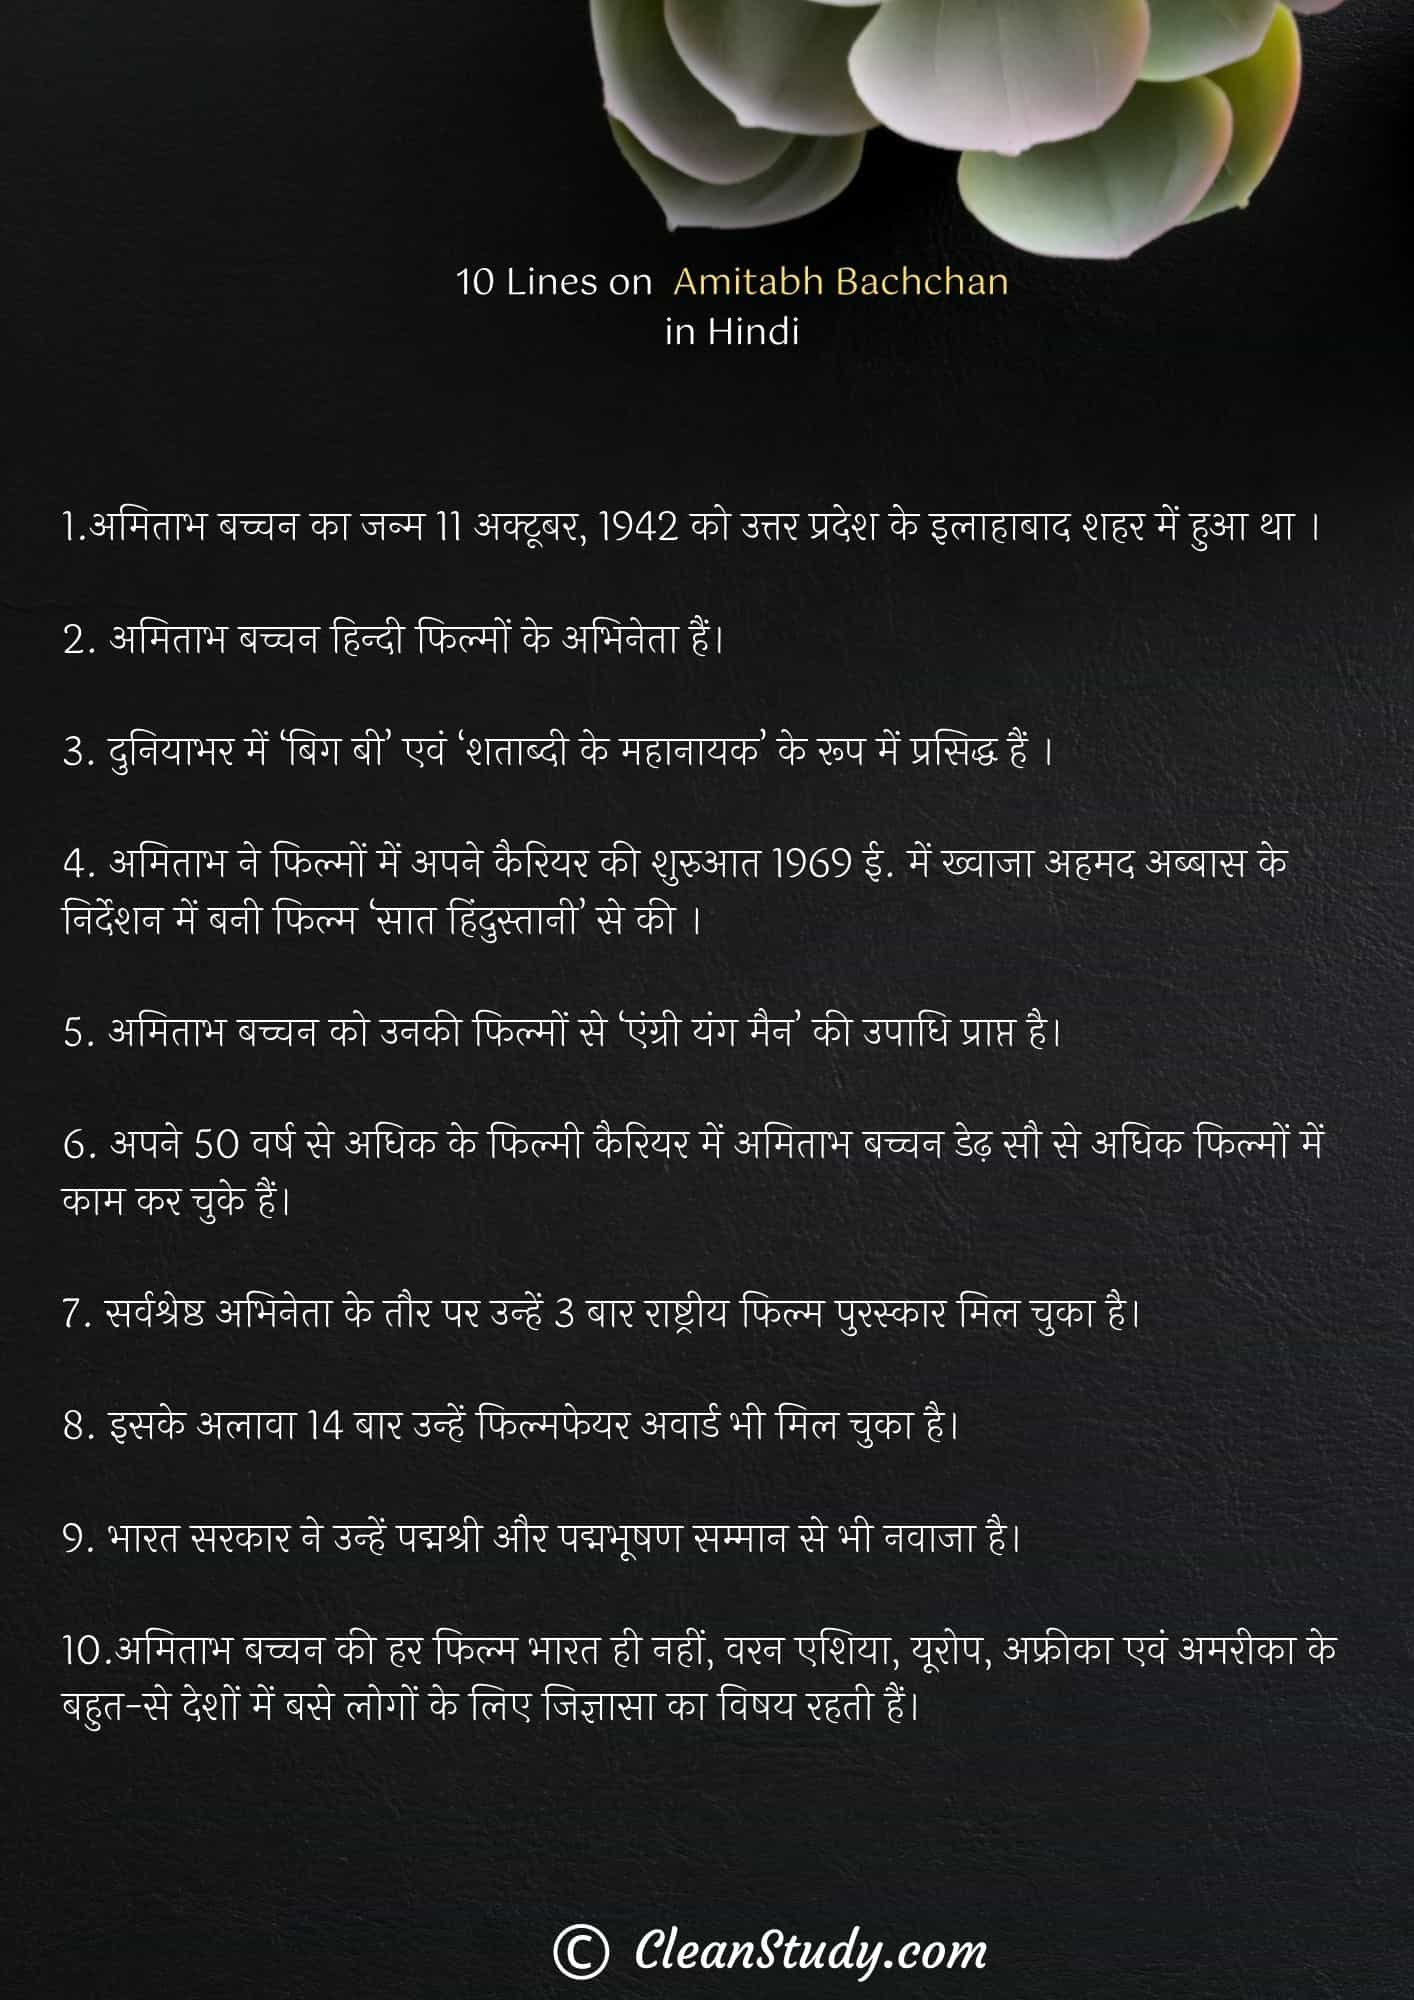 10 Lines on Amitabh Bachchan in Hindi